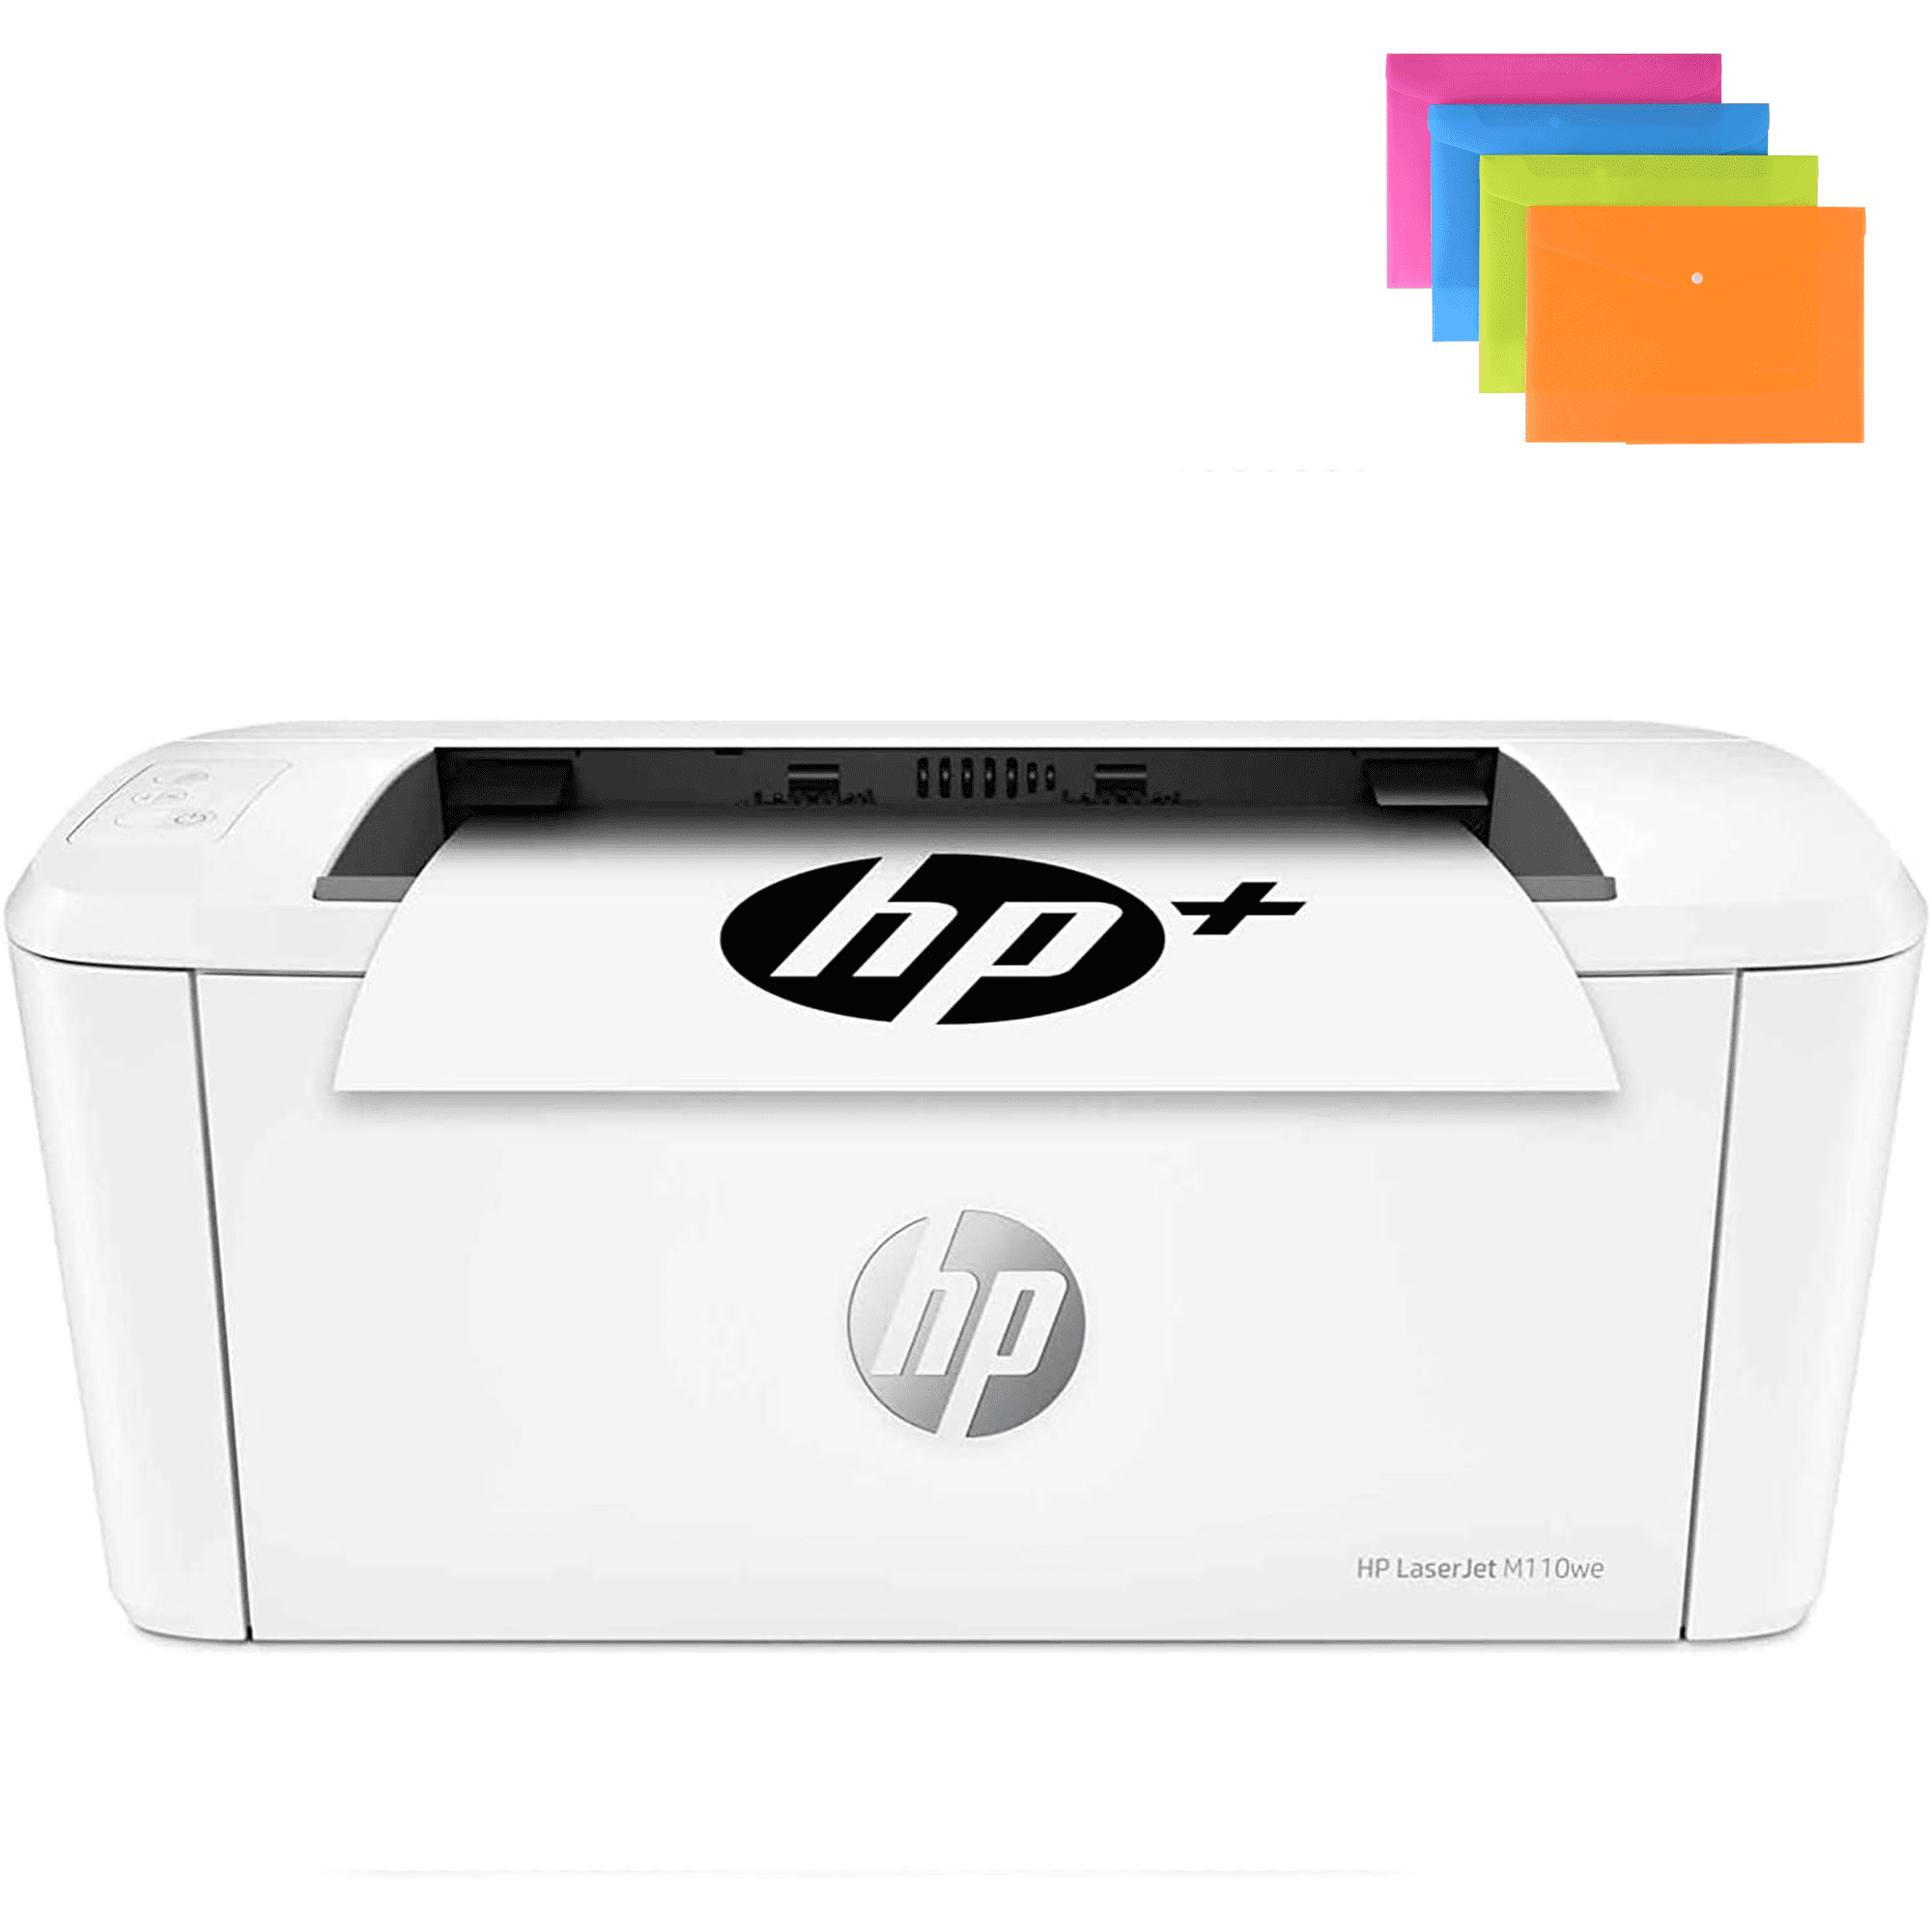 H-P Laserjet Folders File with 8.5 Printer Laser Auto-On/Auto-Off x USB, x 600 Monochrome 600 Print, 21 14, Wi-Fi, Technology, M110we dpi, ppm, HP+, Wireless